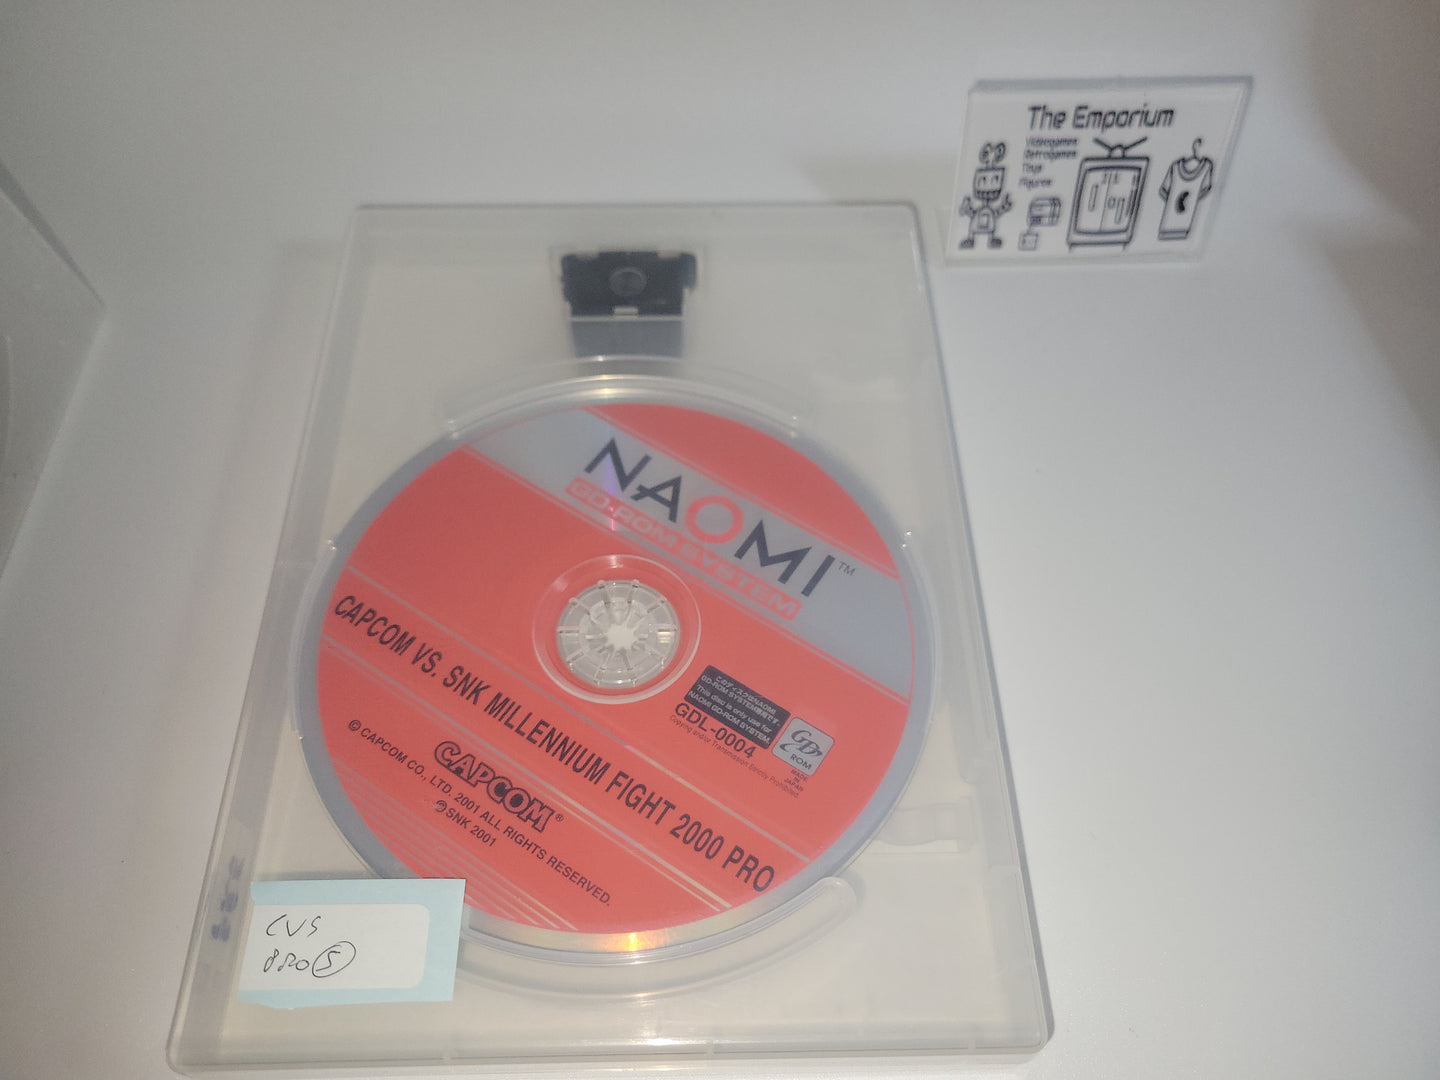 Capcom vs. SNK Millennium Fight 2000 Pro (Gd-Rom + Dongle) - Arcade Pcb Printed Circuit Board